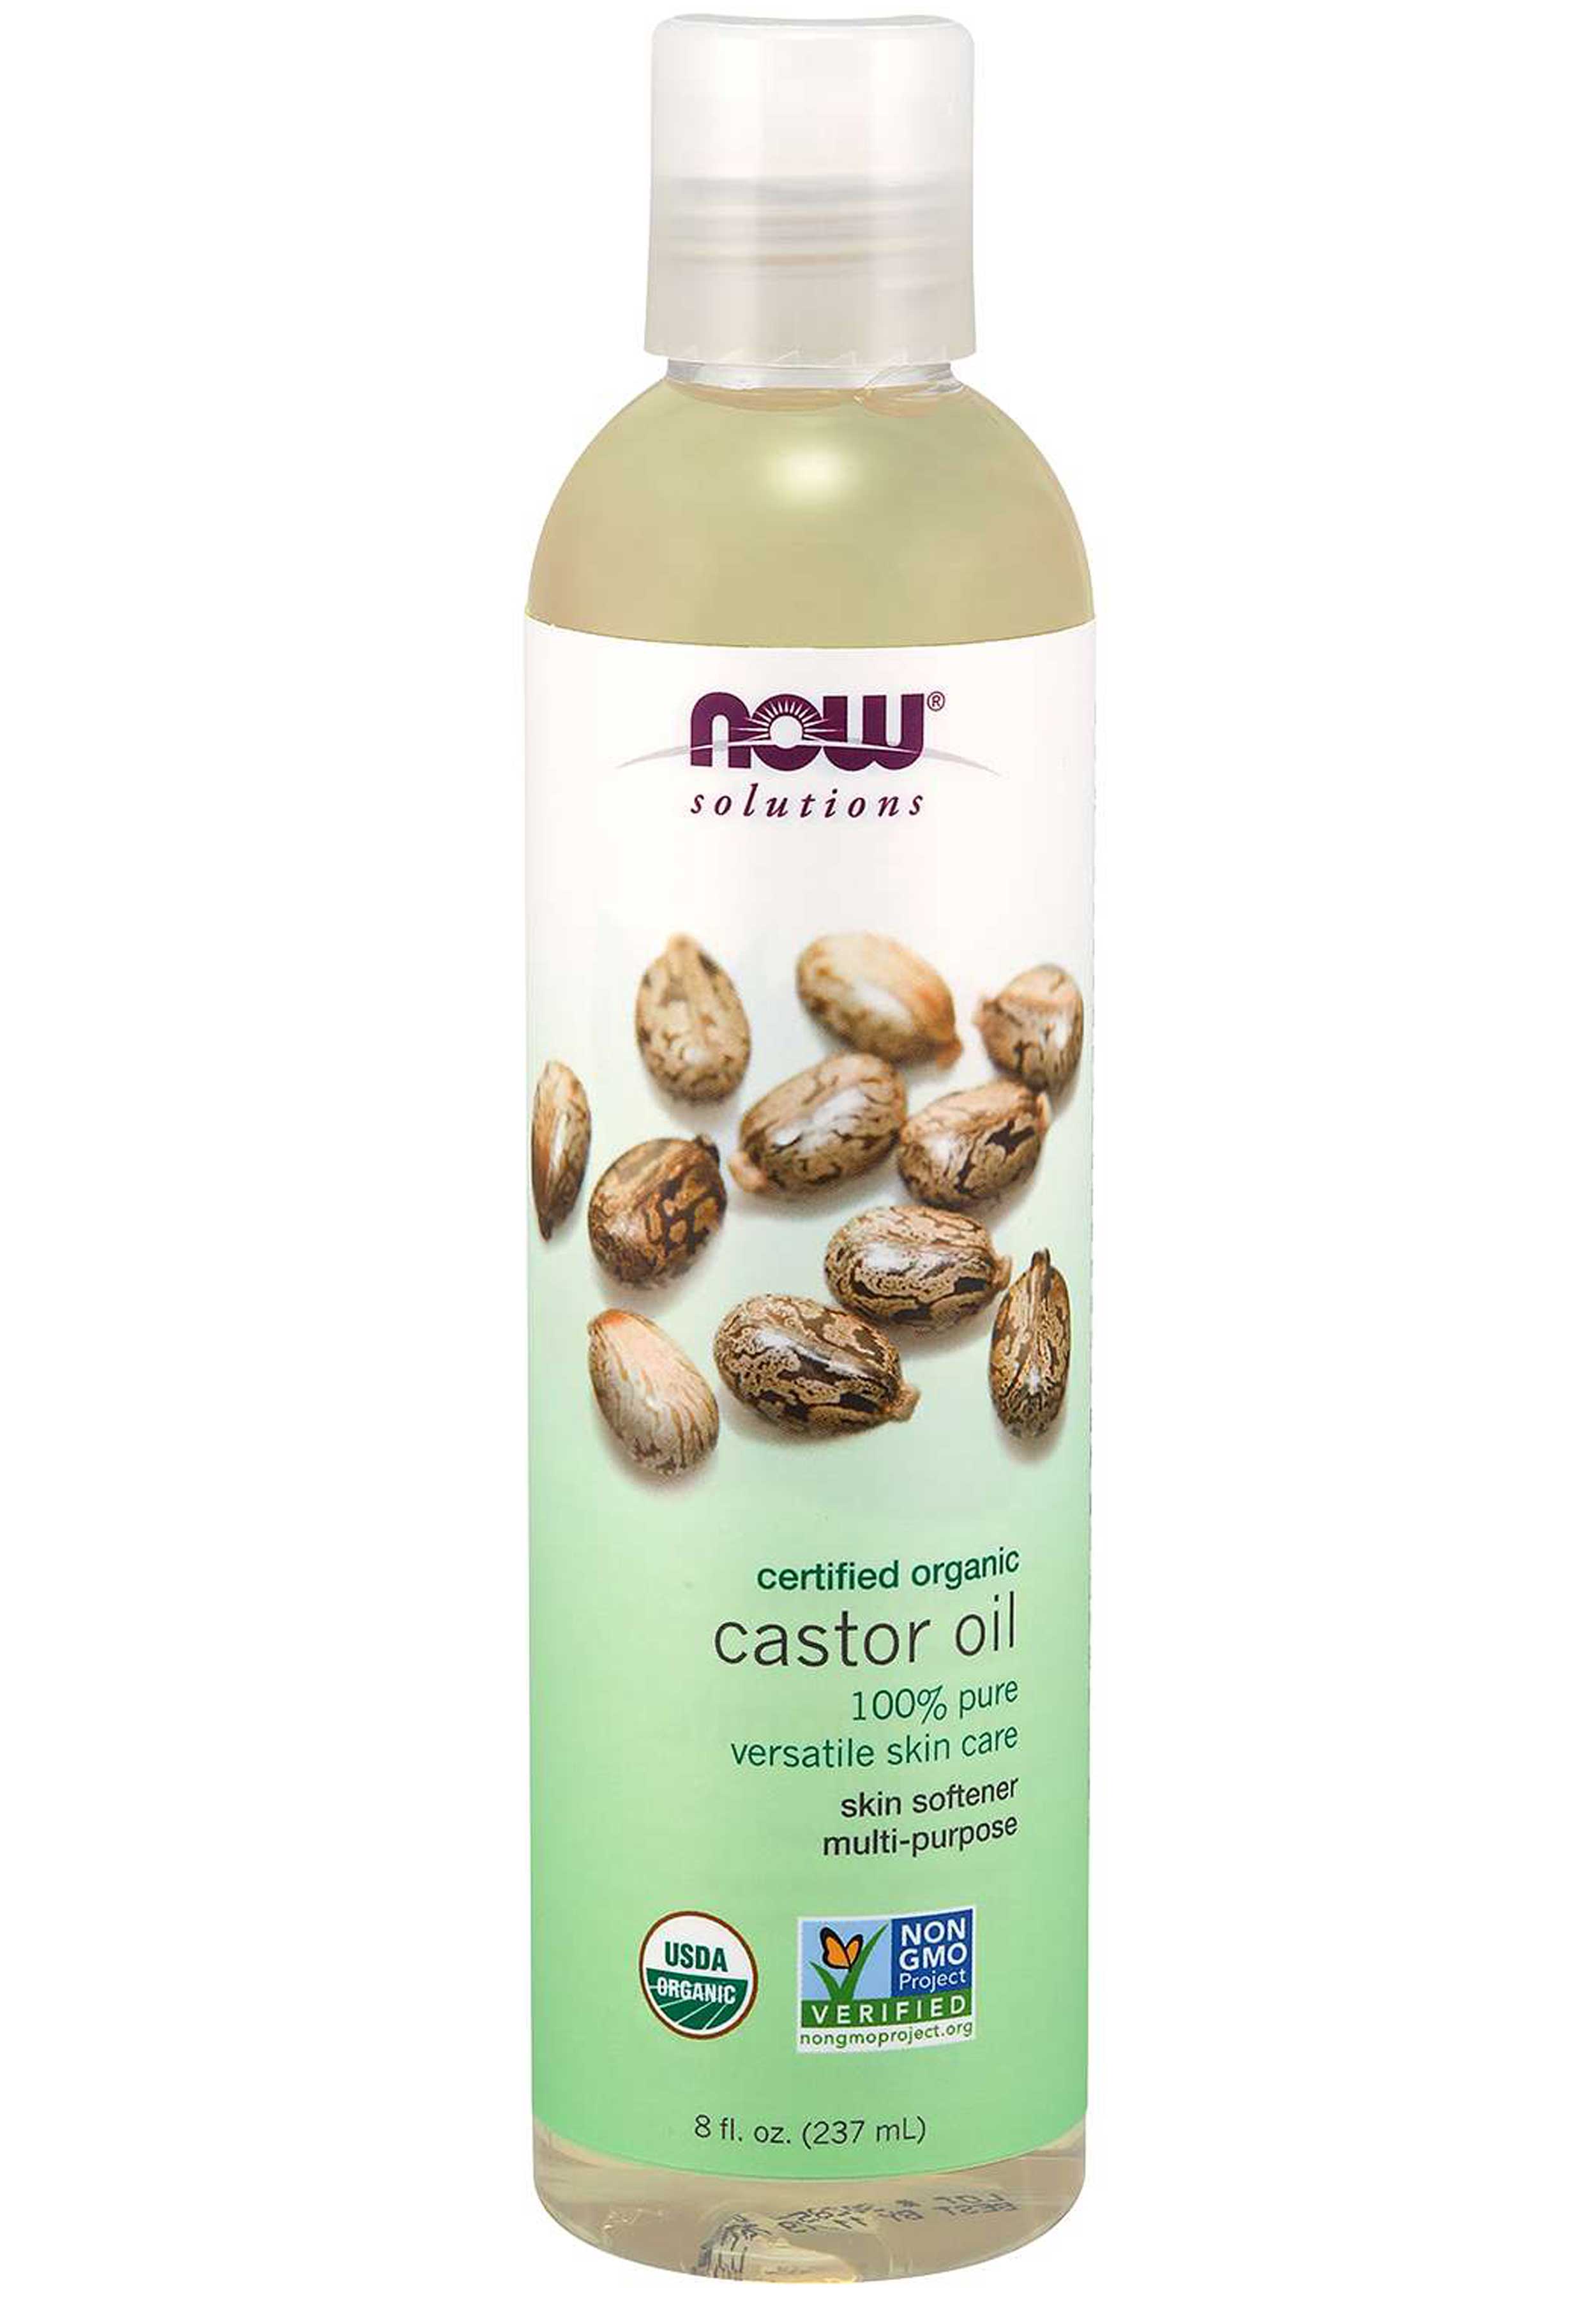 NOW Solutions Castor Oil, Organic